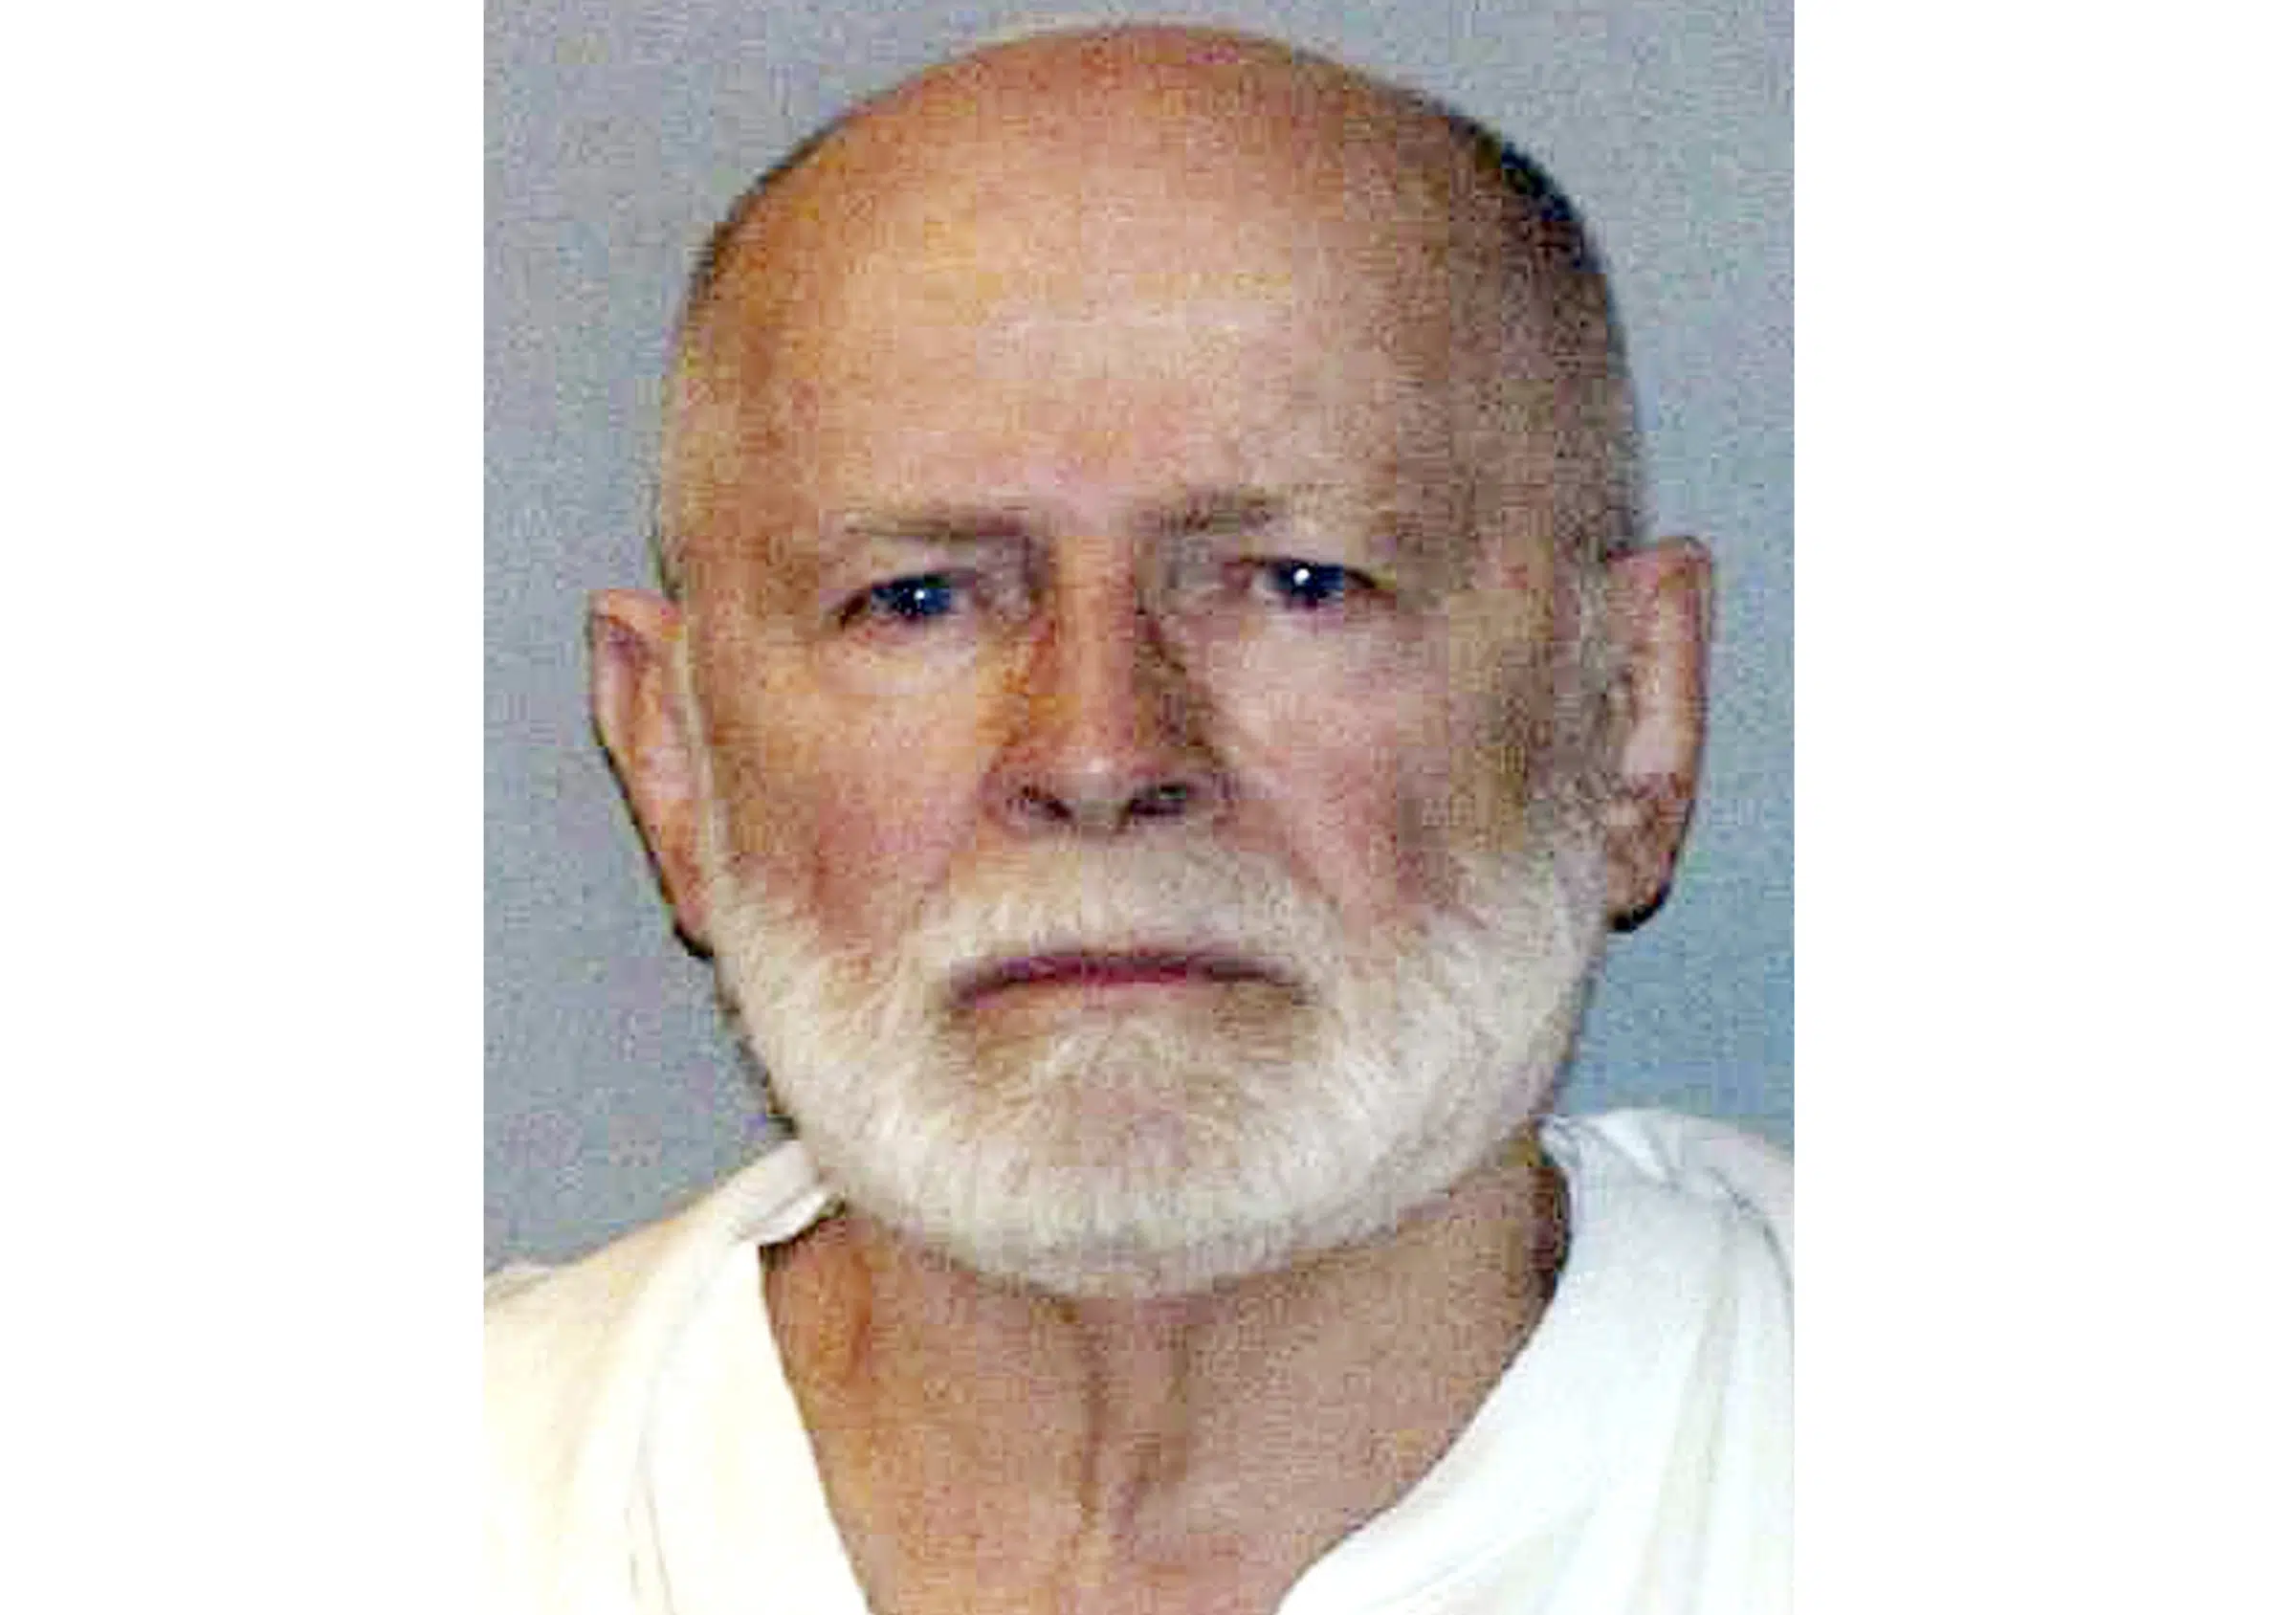  Watchdog finds prison failures before Whitey Bulger killing